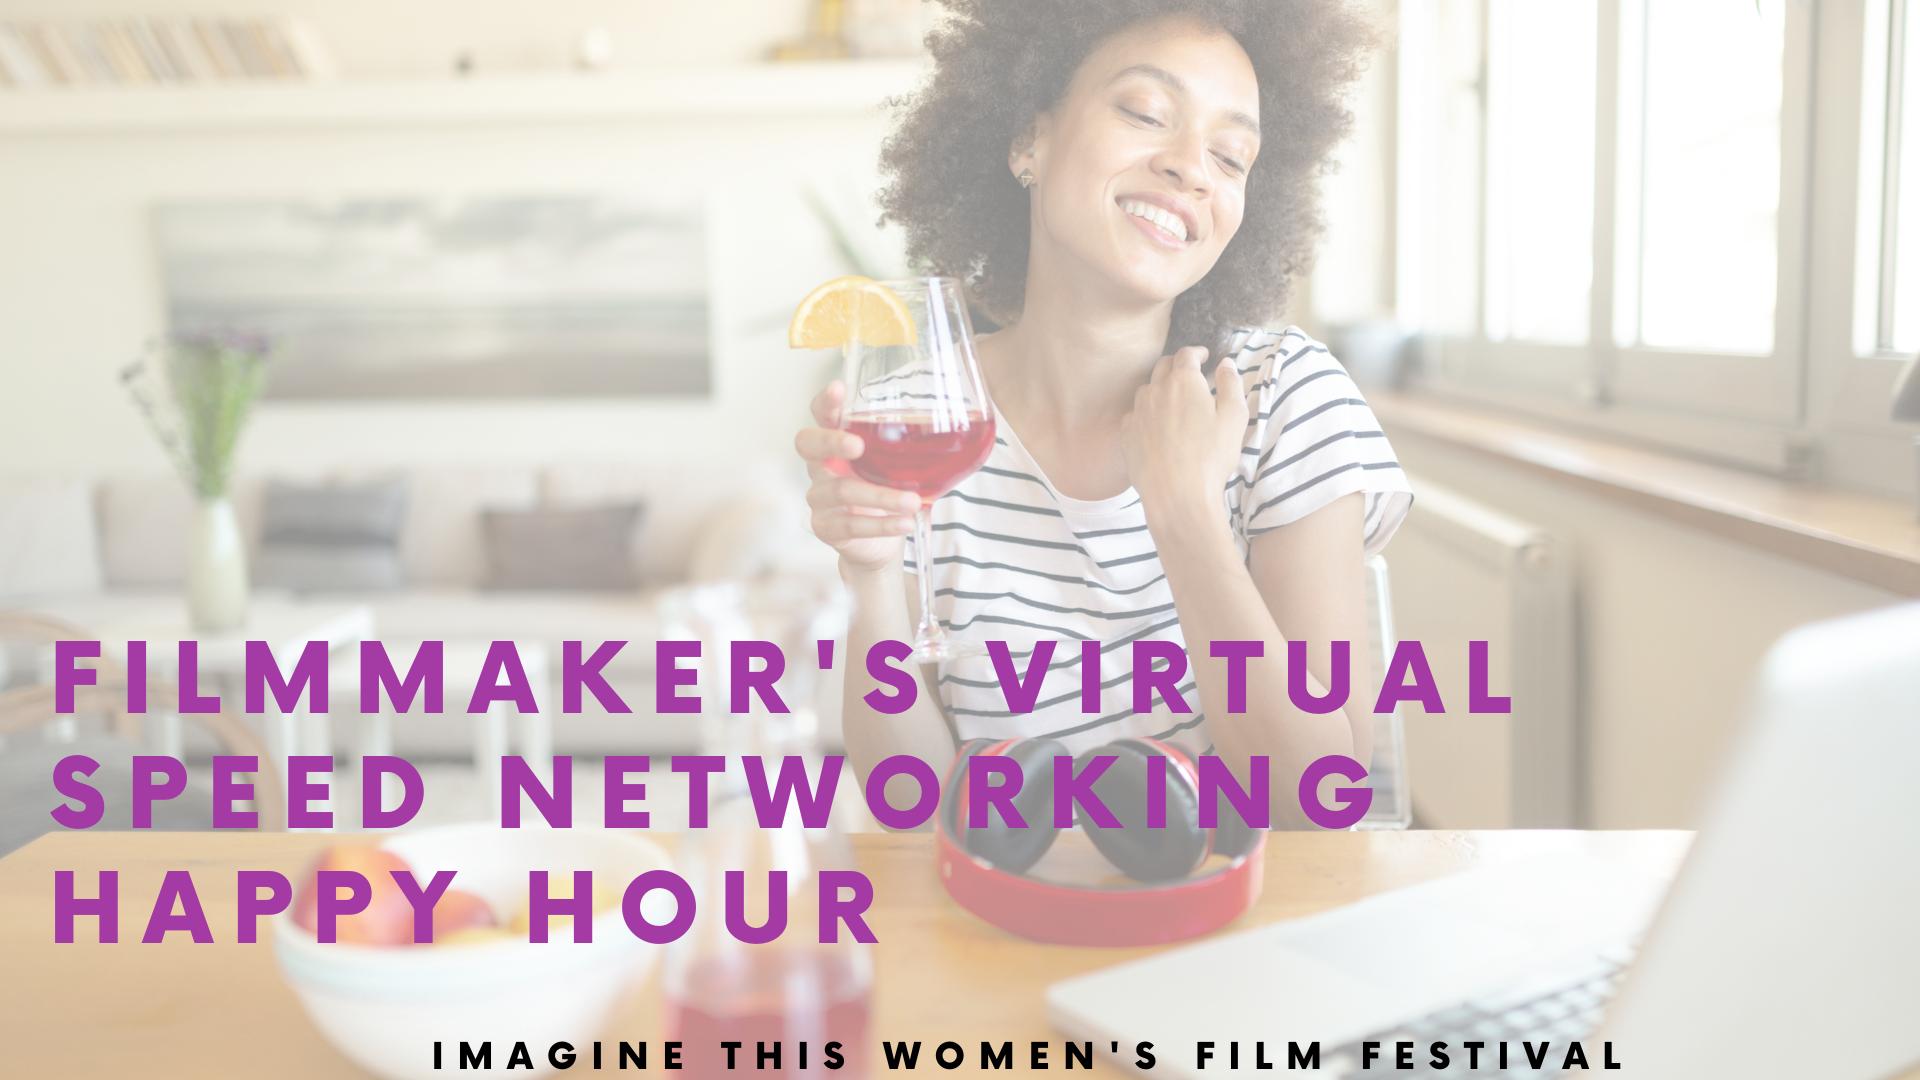 Filmmaker's Virtual Speed Networking Happy Hour